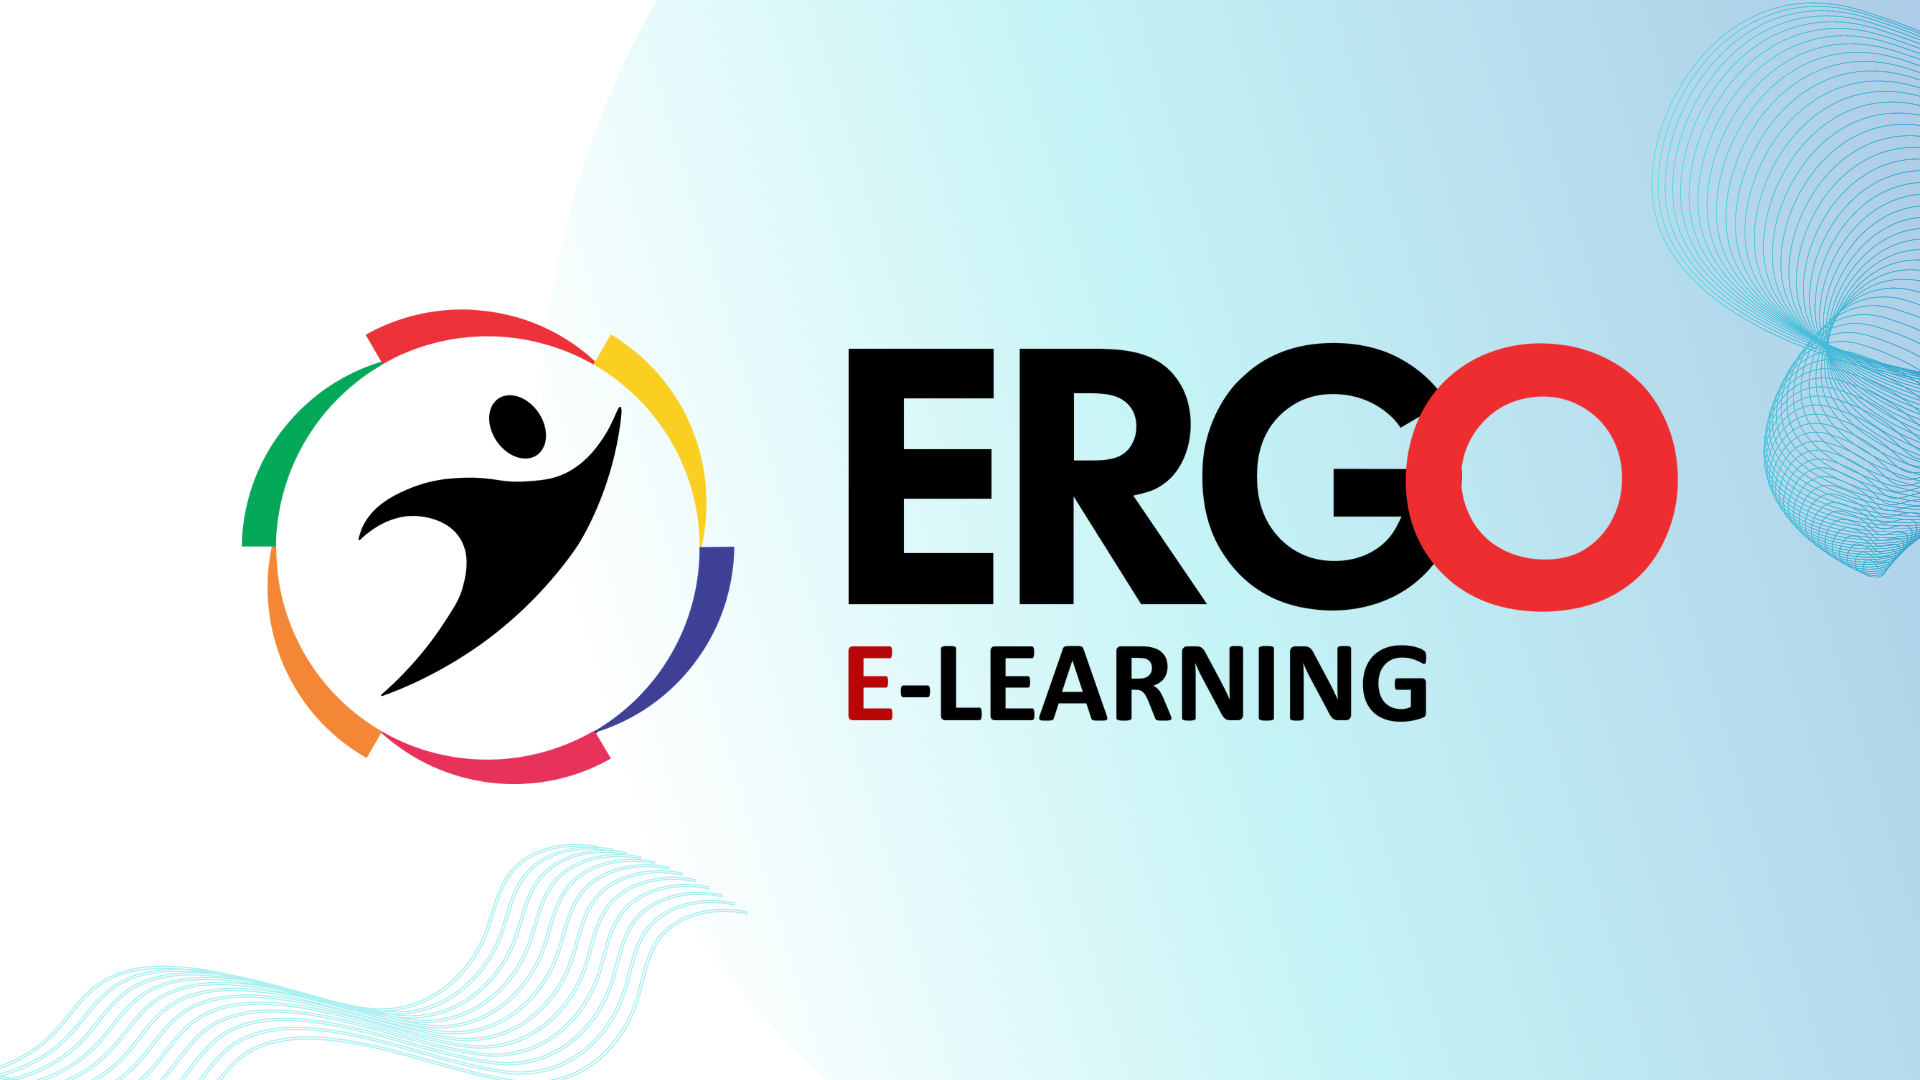 Ergo E-Learning Google Ads